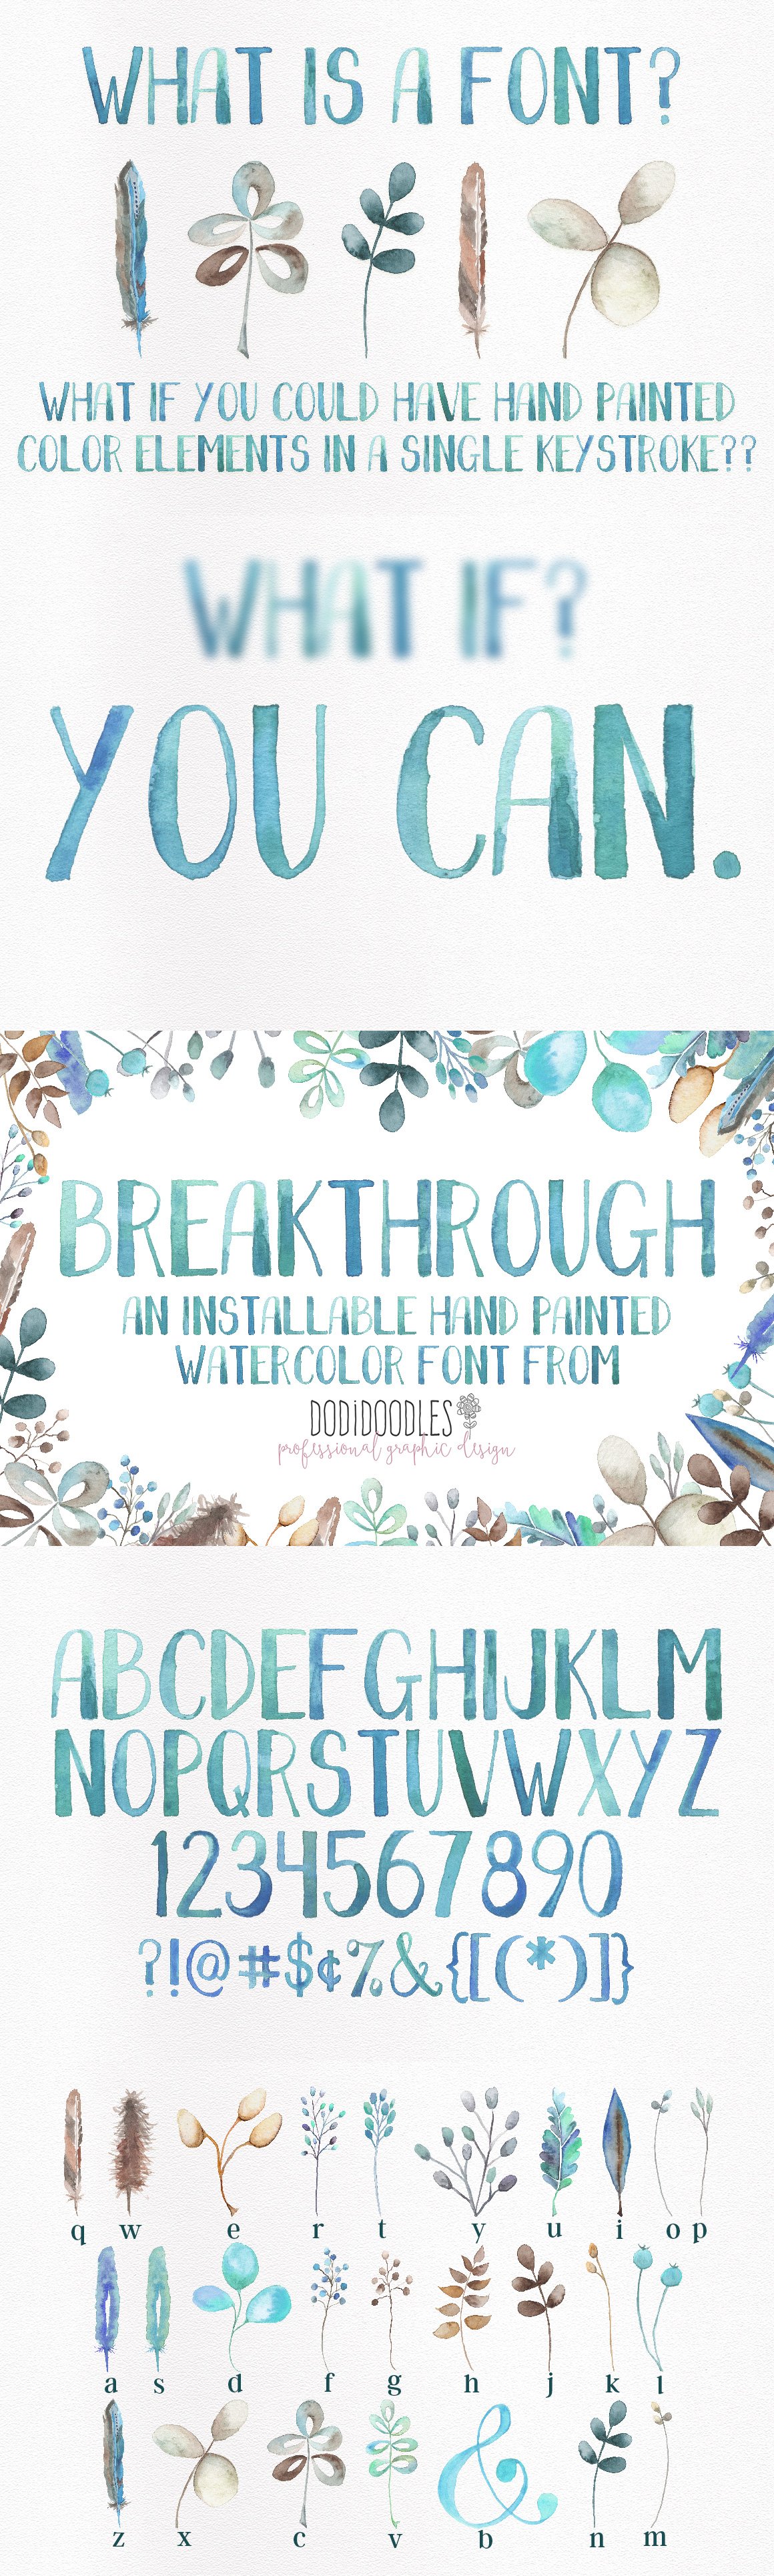 Sale Breakthrough Watercolor Font preview image.